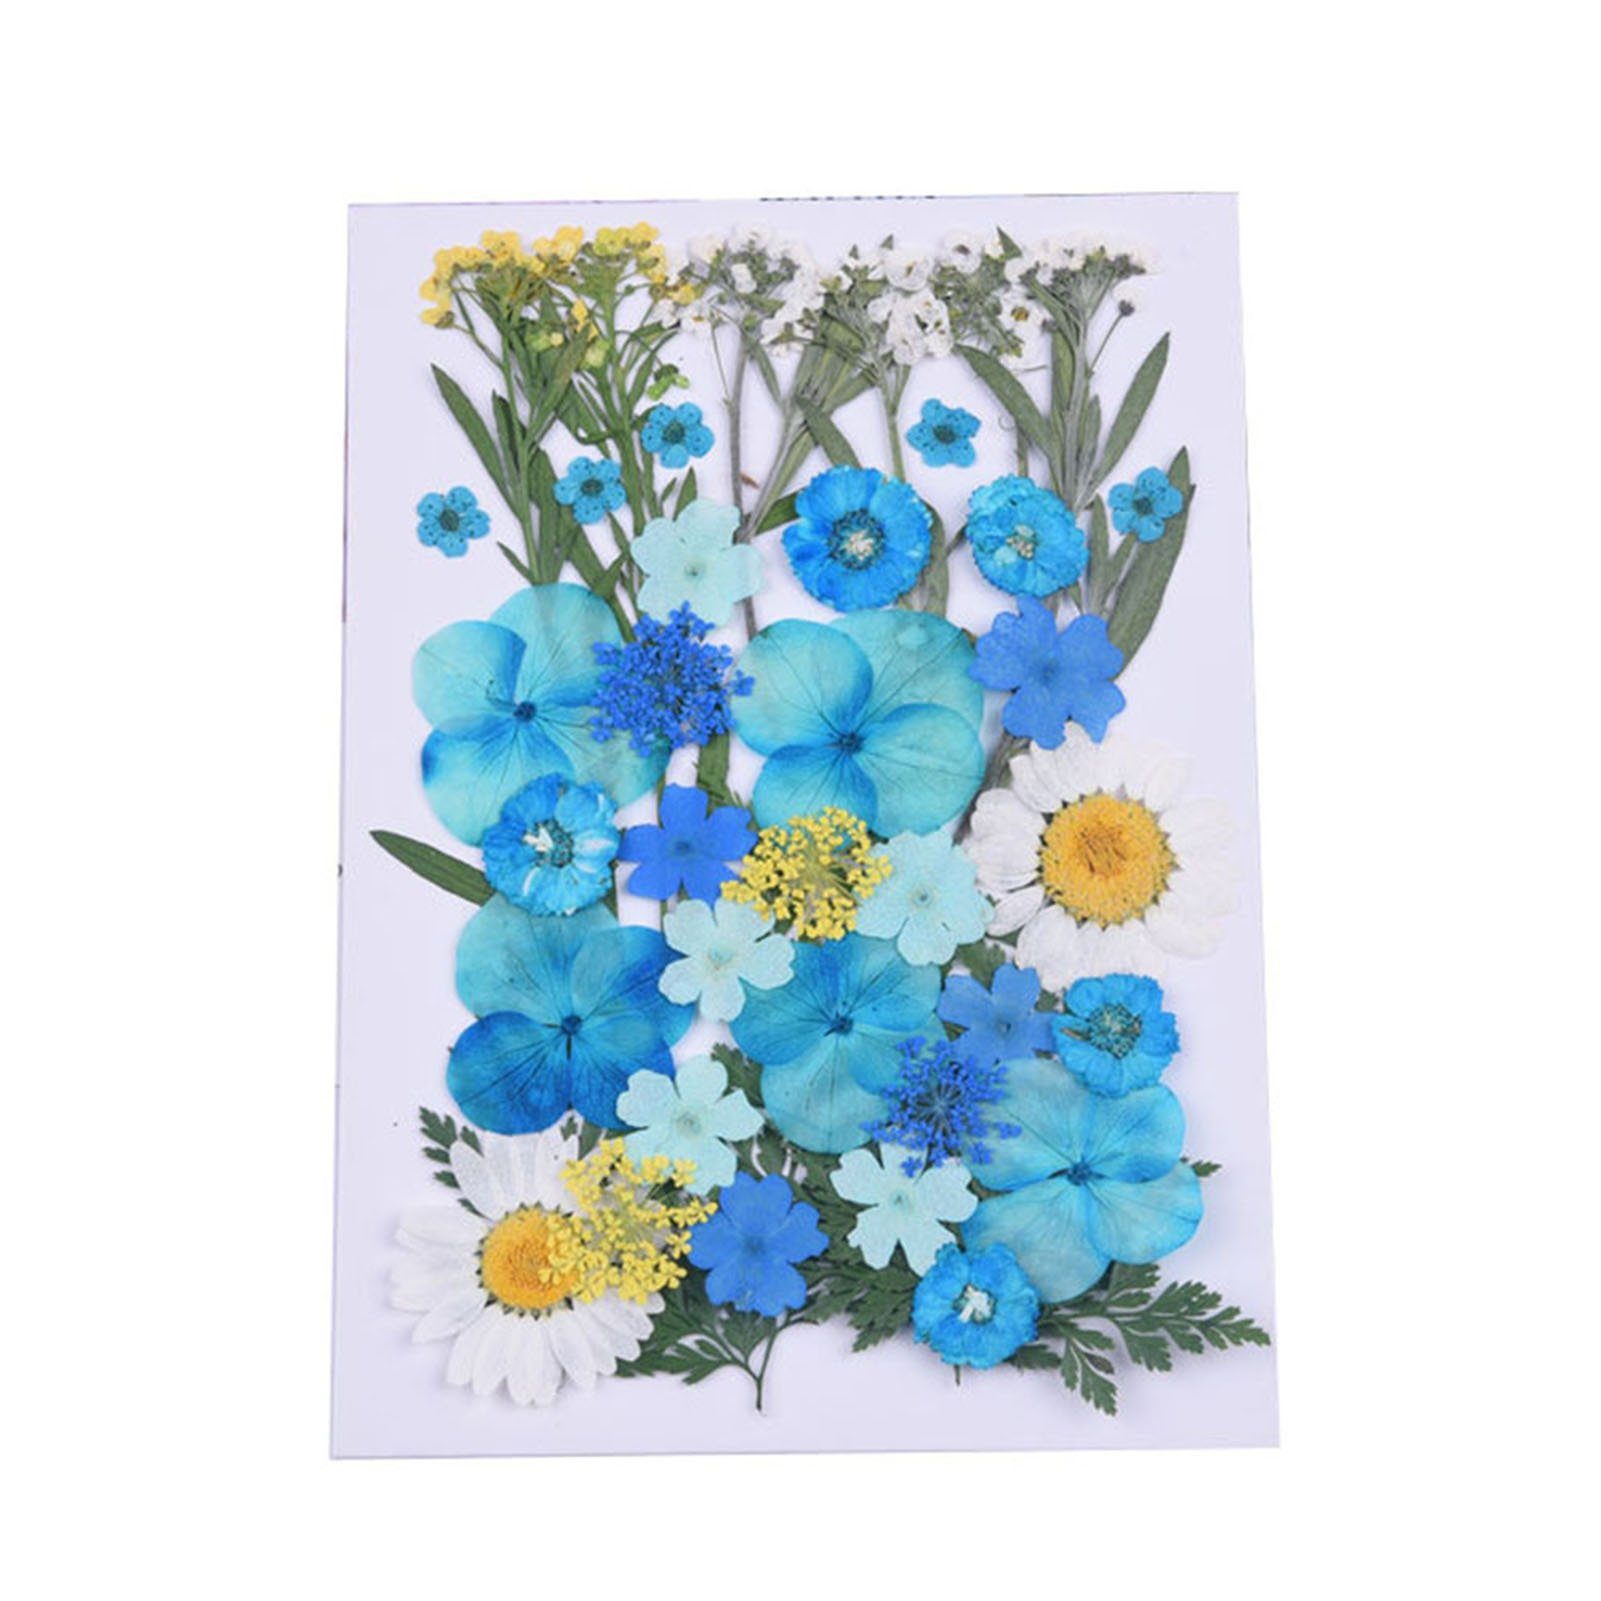 and Trockenblumen-Set Blumen, Getrocknetes, blue white Blusmart Zum Selbermachen, Trockenblume Gepresste